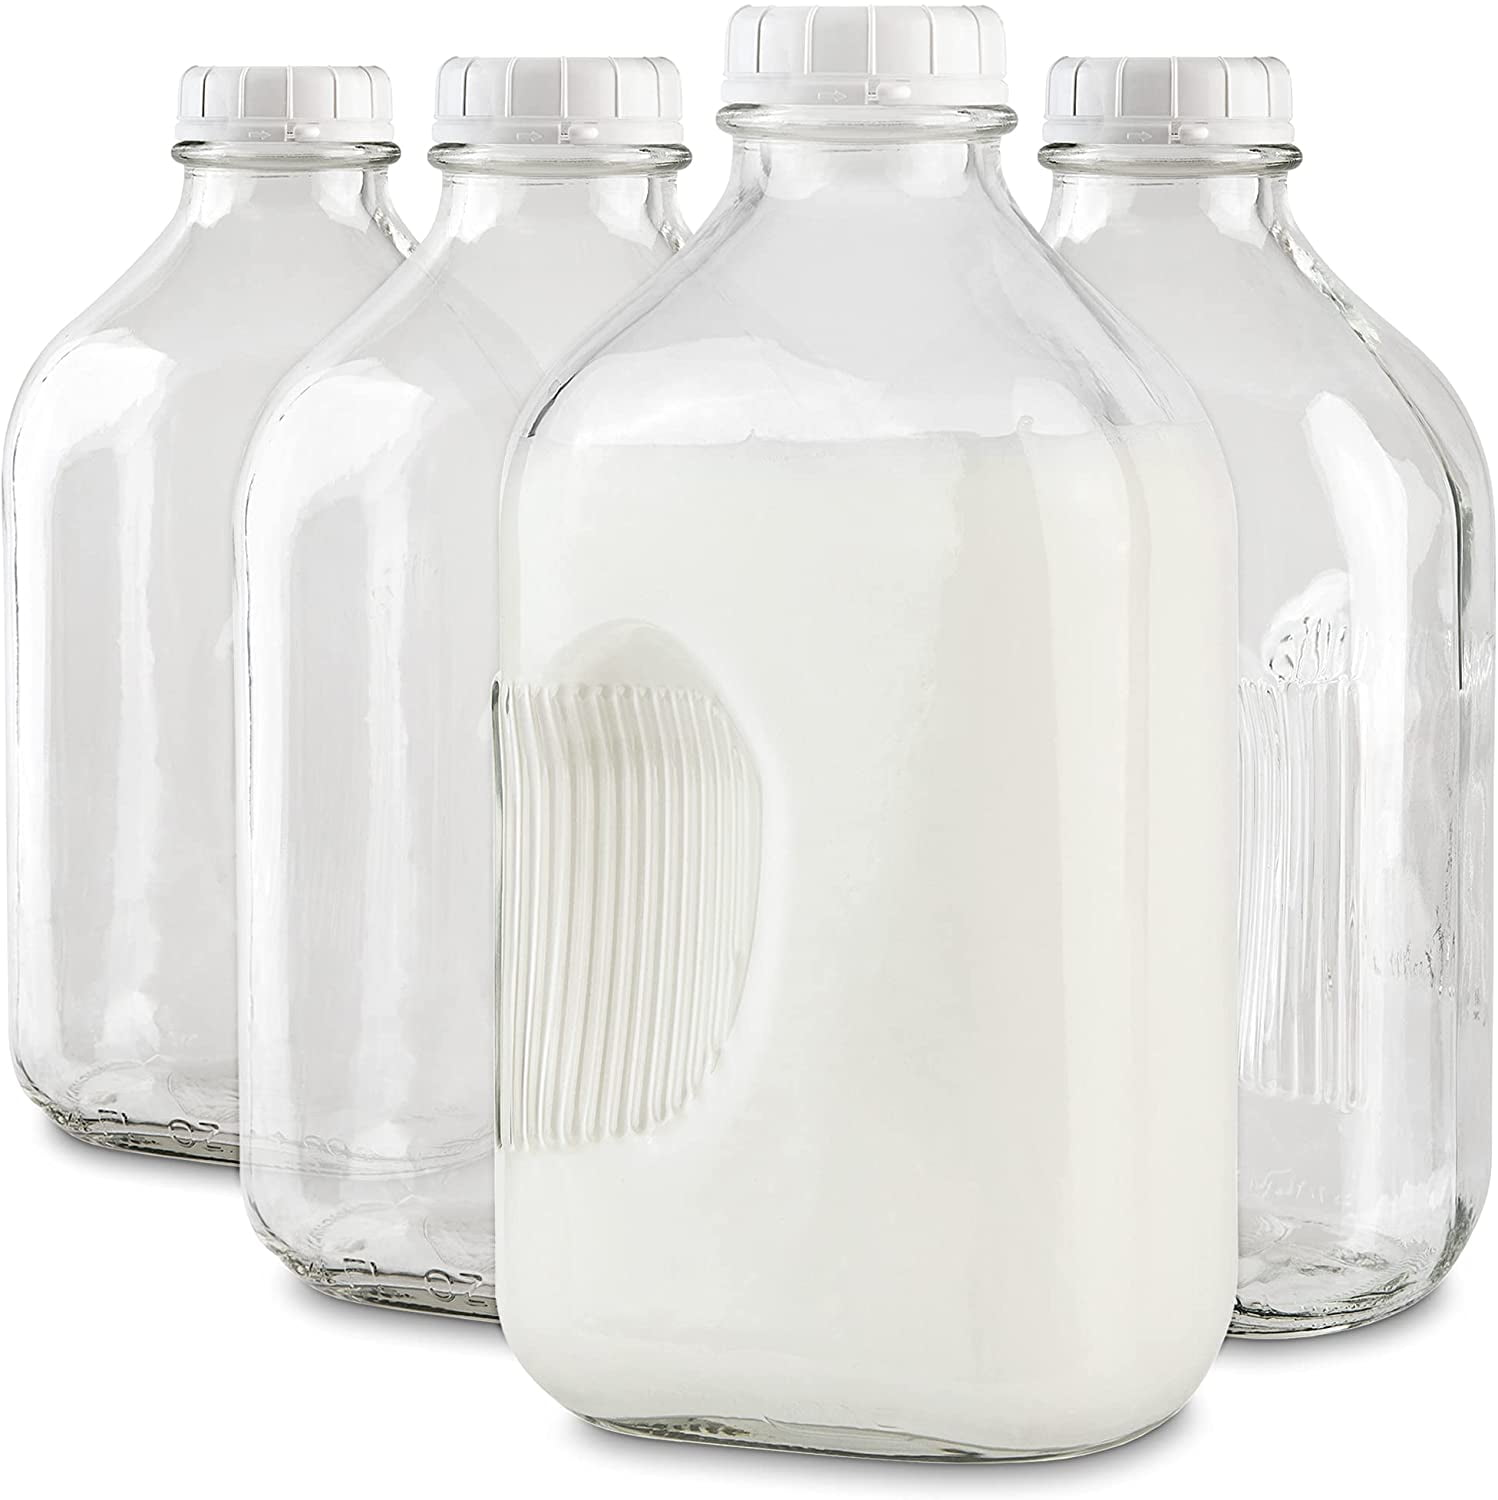 2 4 6 x 1L Water Clear Glass Swing Lid Milk Bottles Reusable Drink Storage Decor 